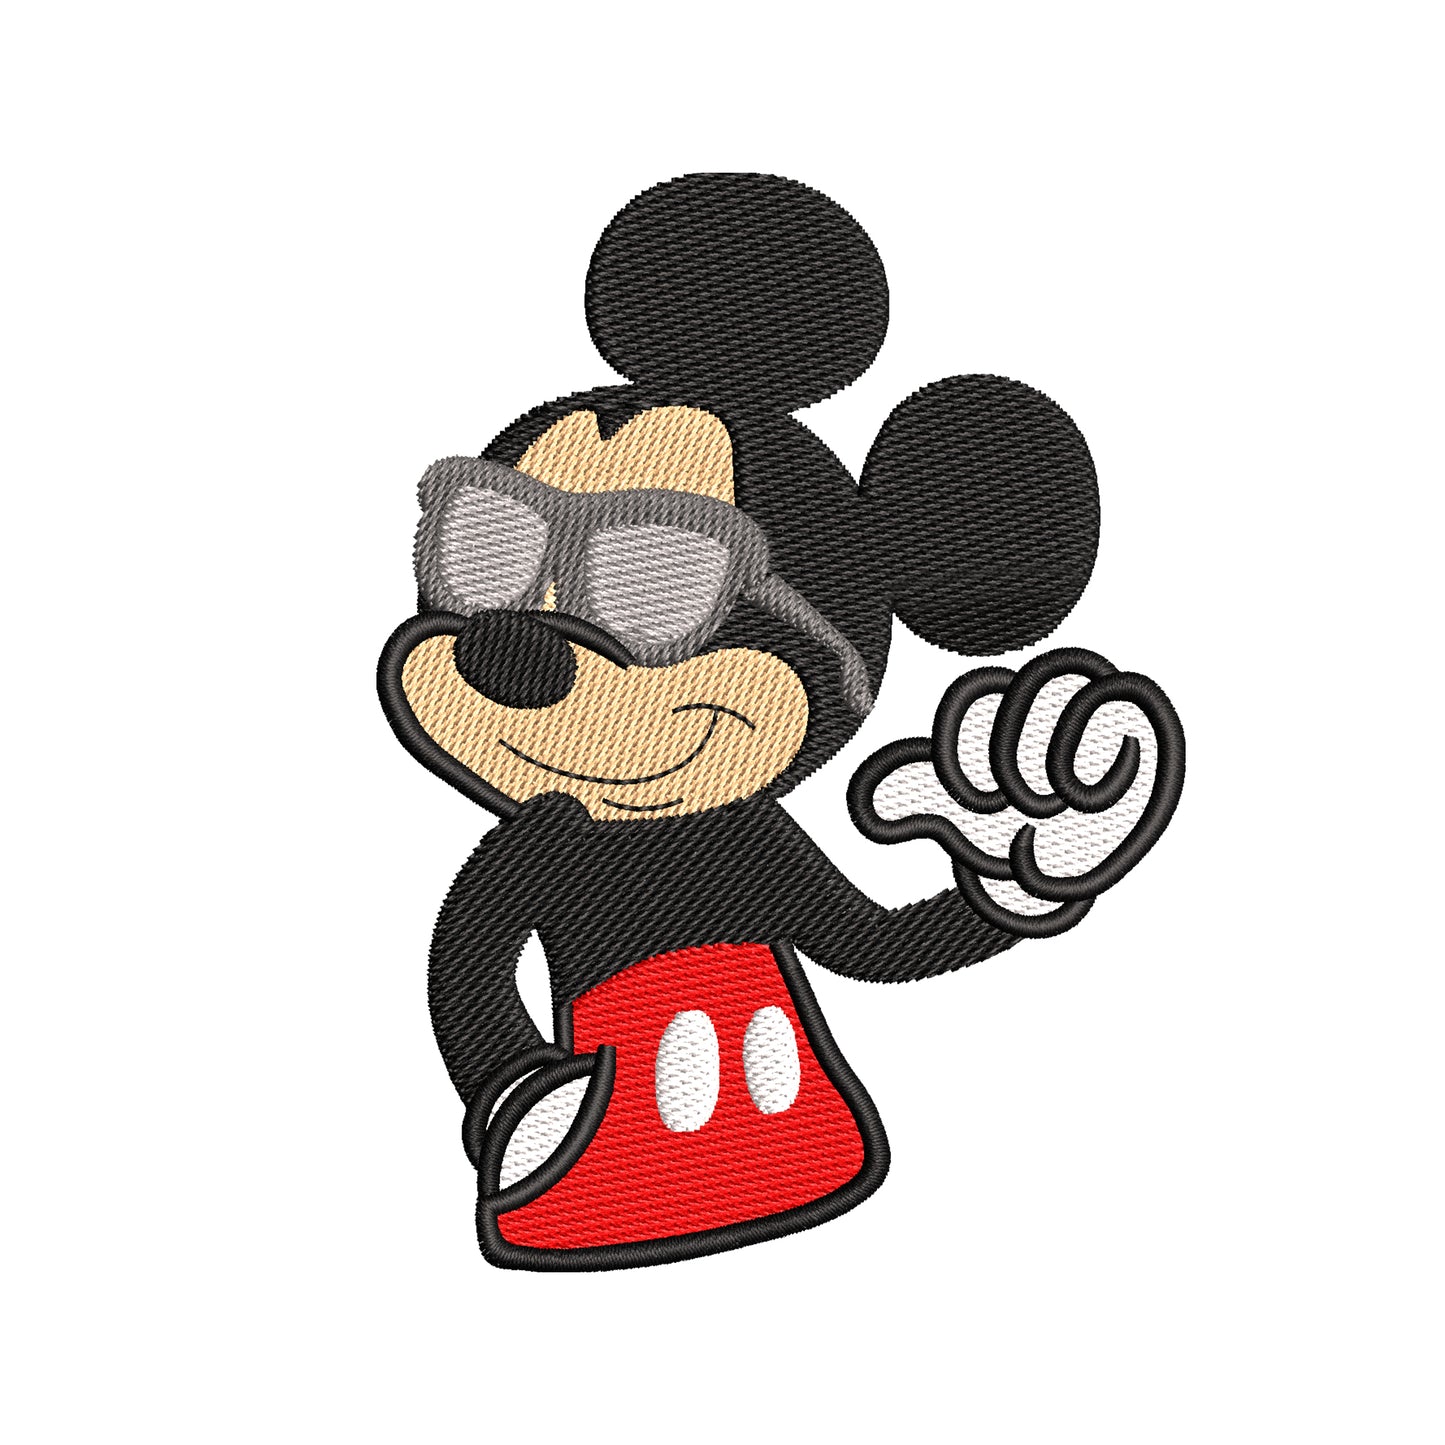 Machine embroidery designs Mickey wearing sunglasses - 08052410